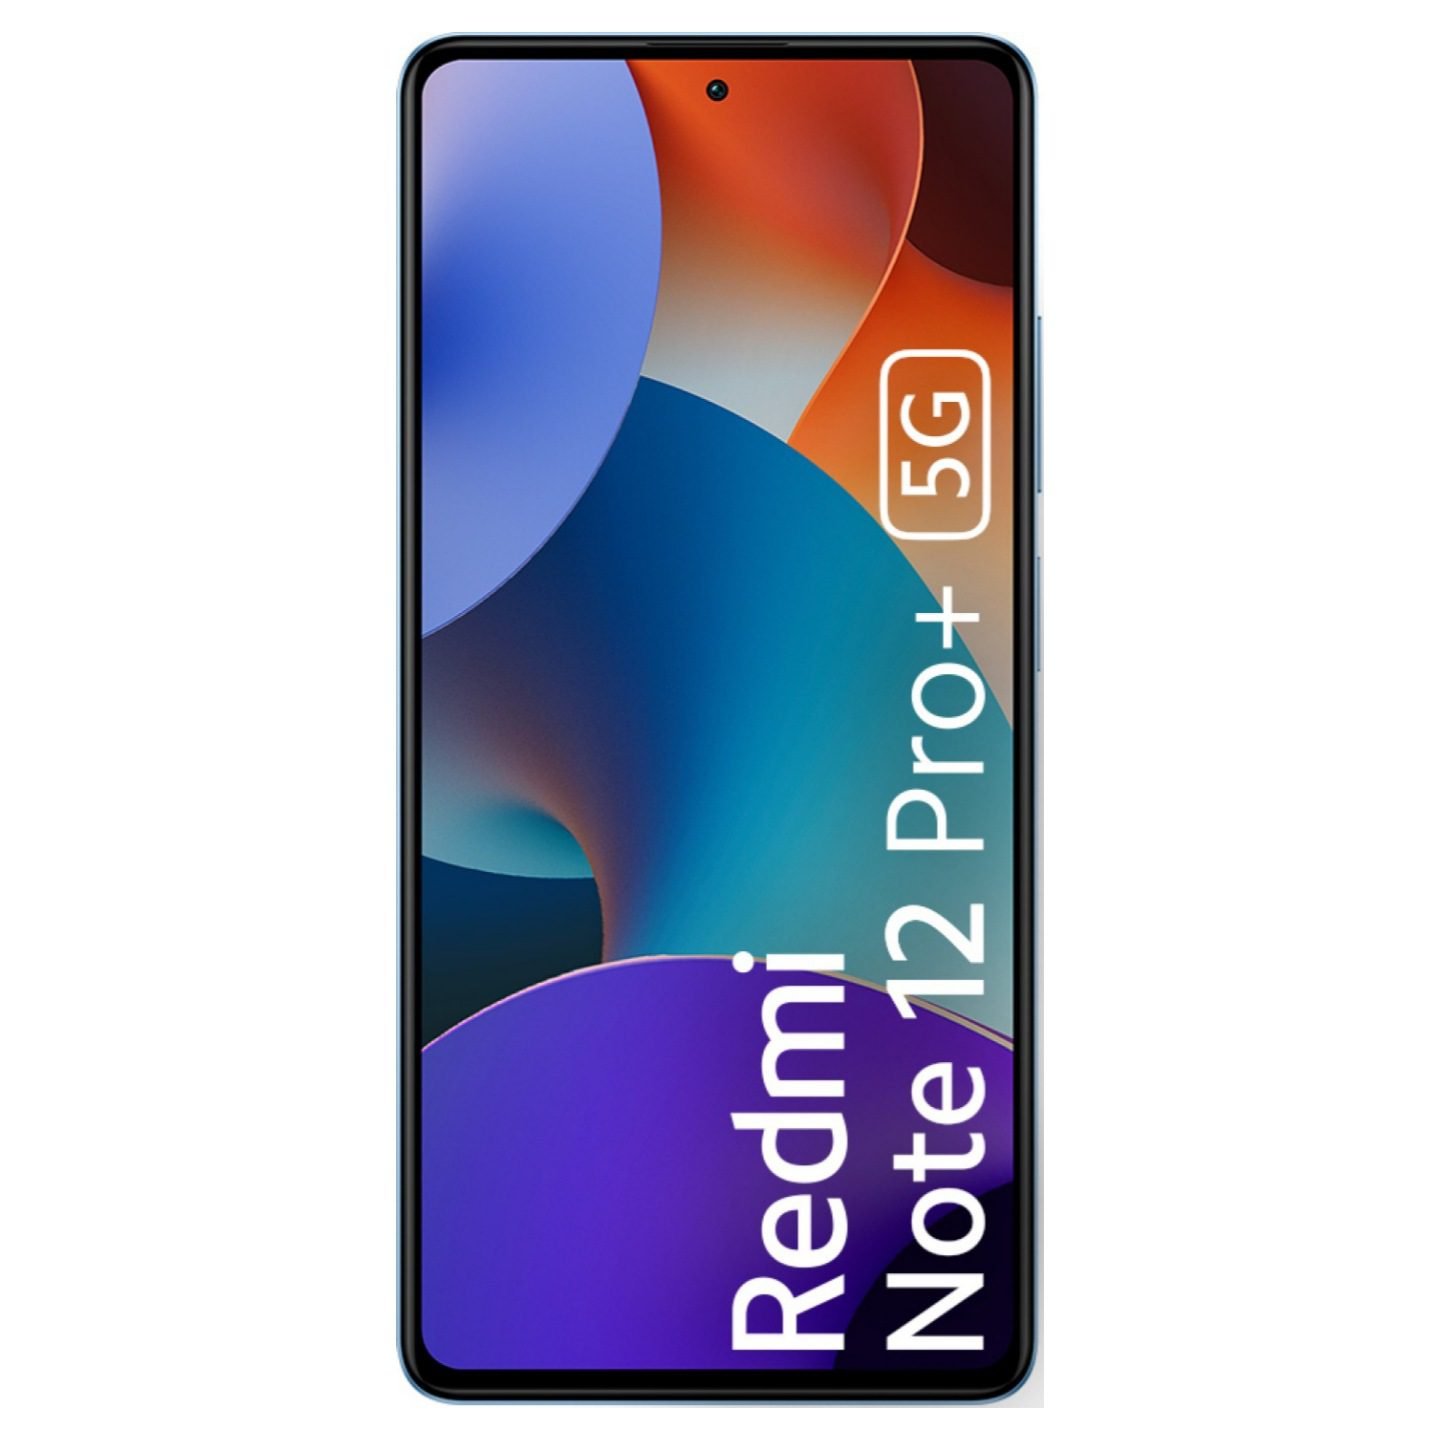 Redmi Note 12 Pro Plus 5G